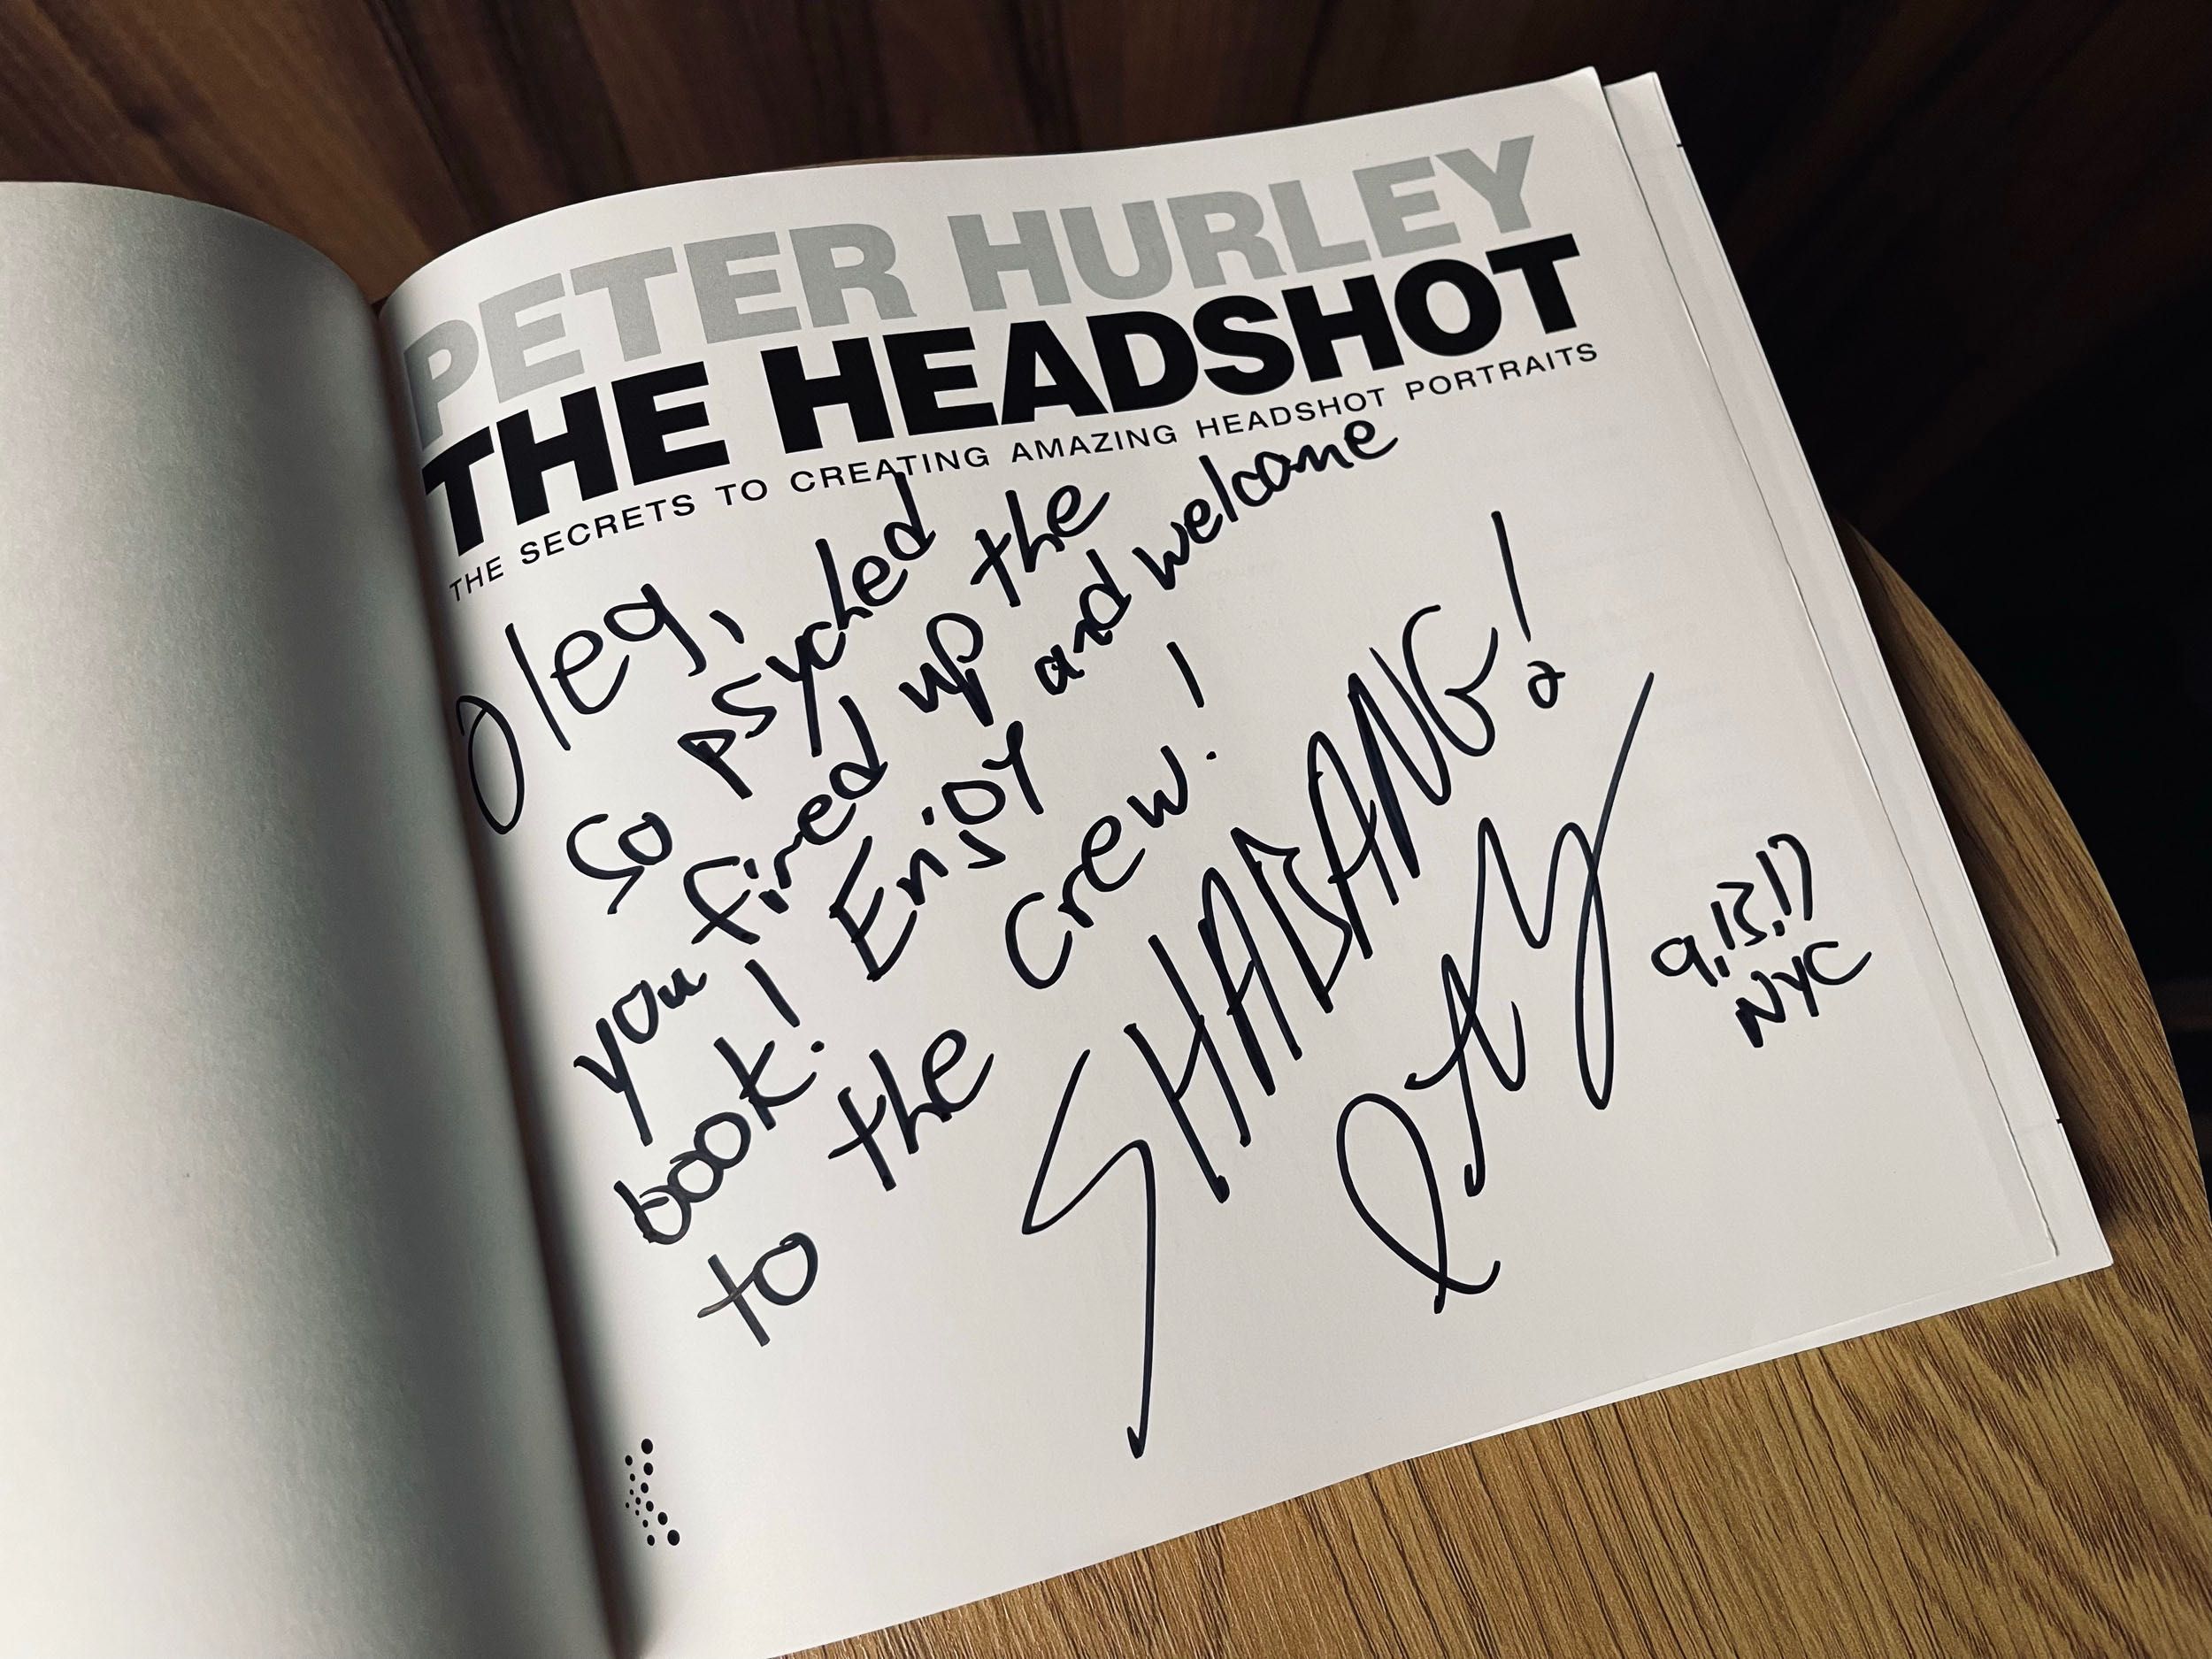 Peter Hurley – The Headshot (з автографом автора)